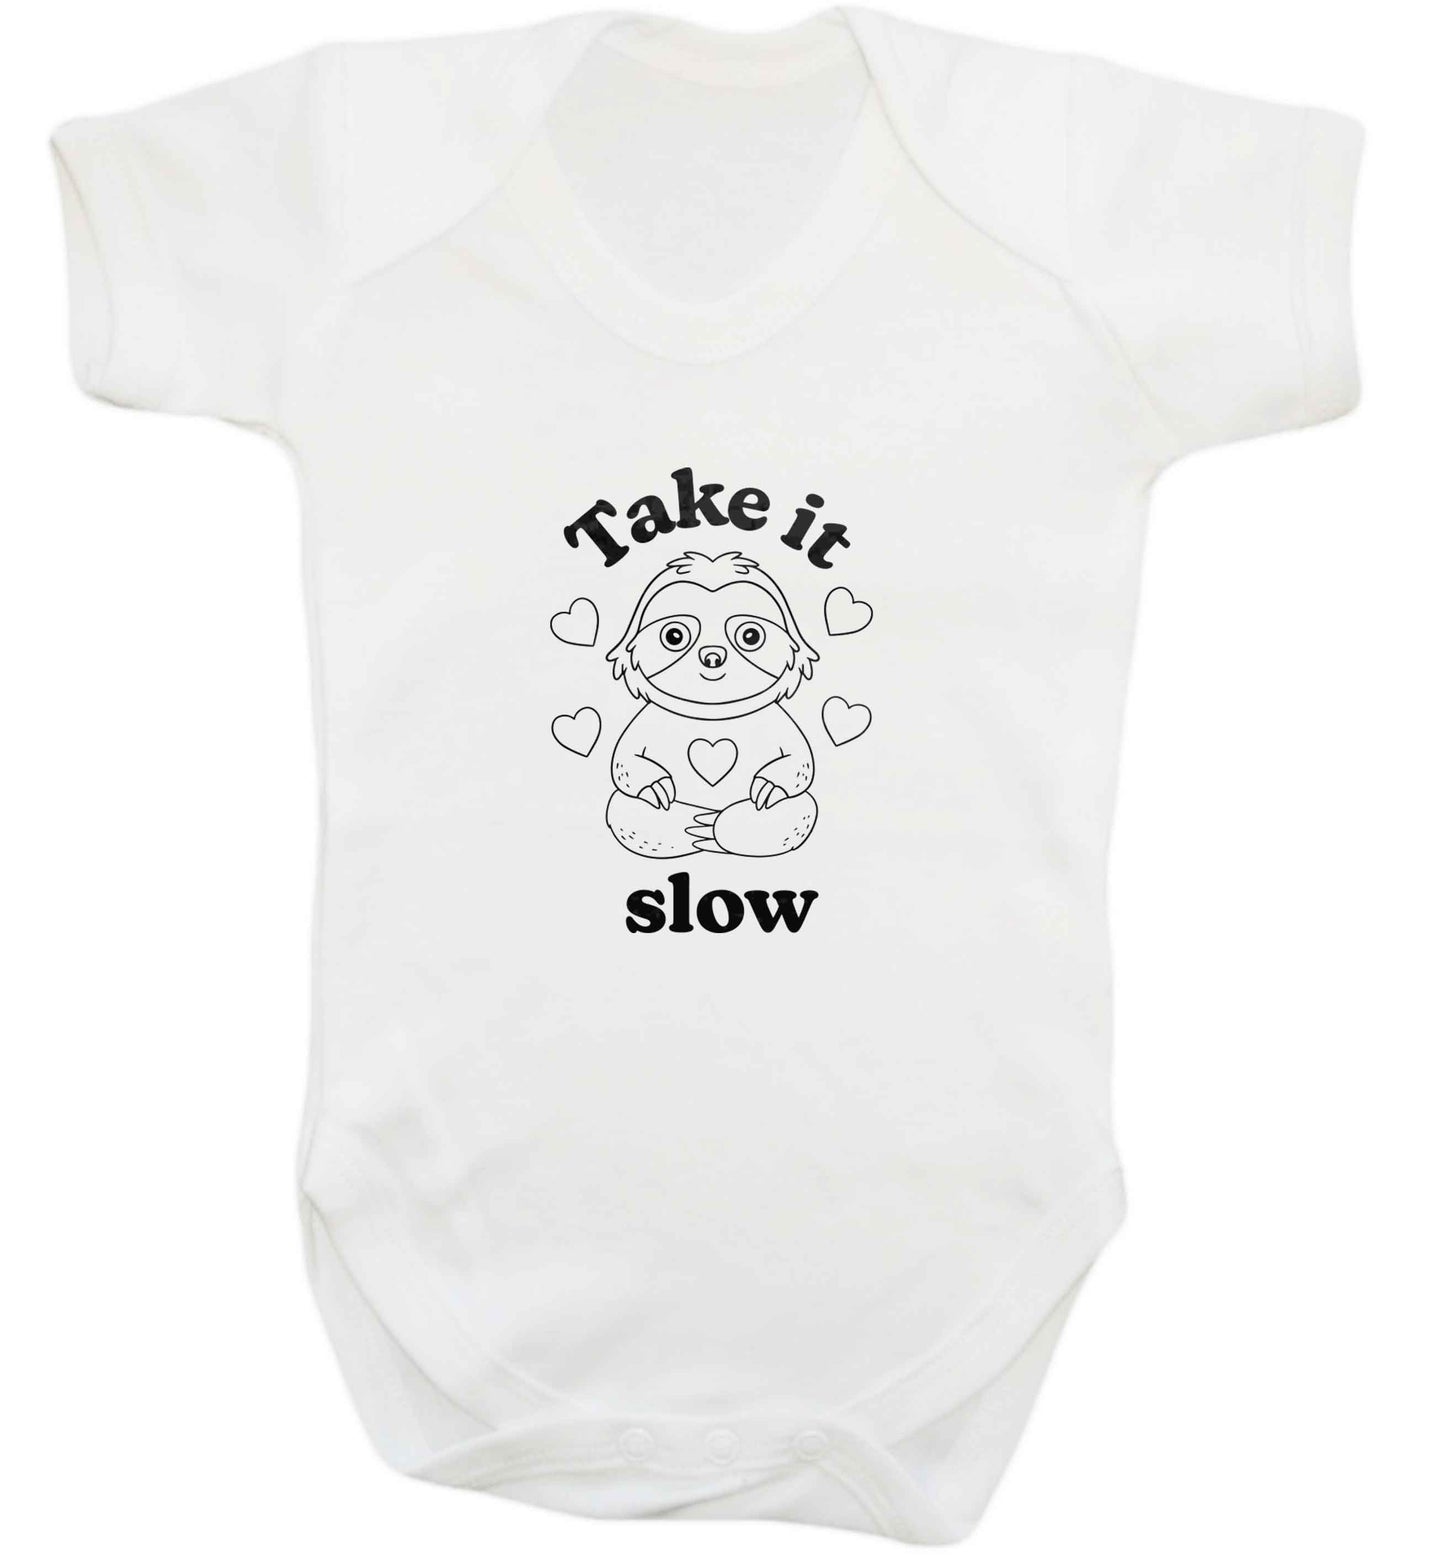 Take it slow baby vest white 18-24 months